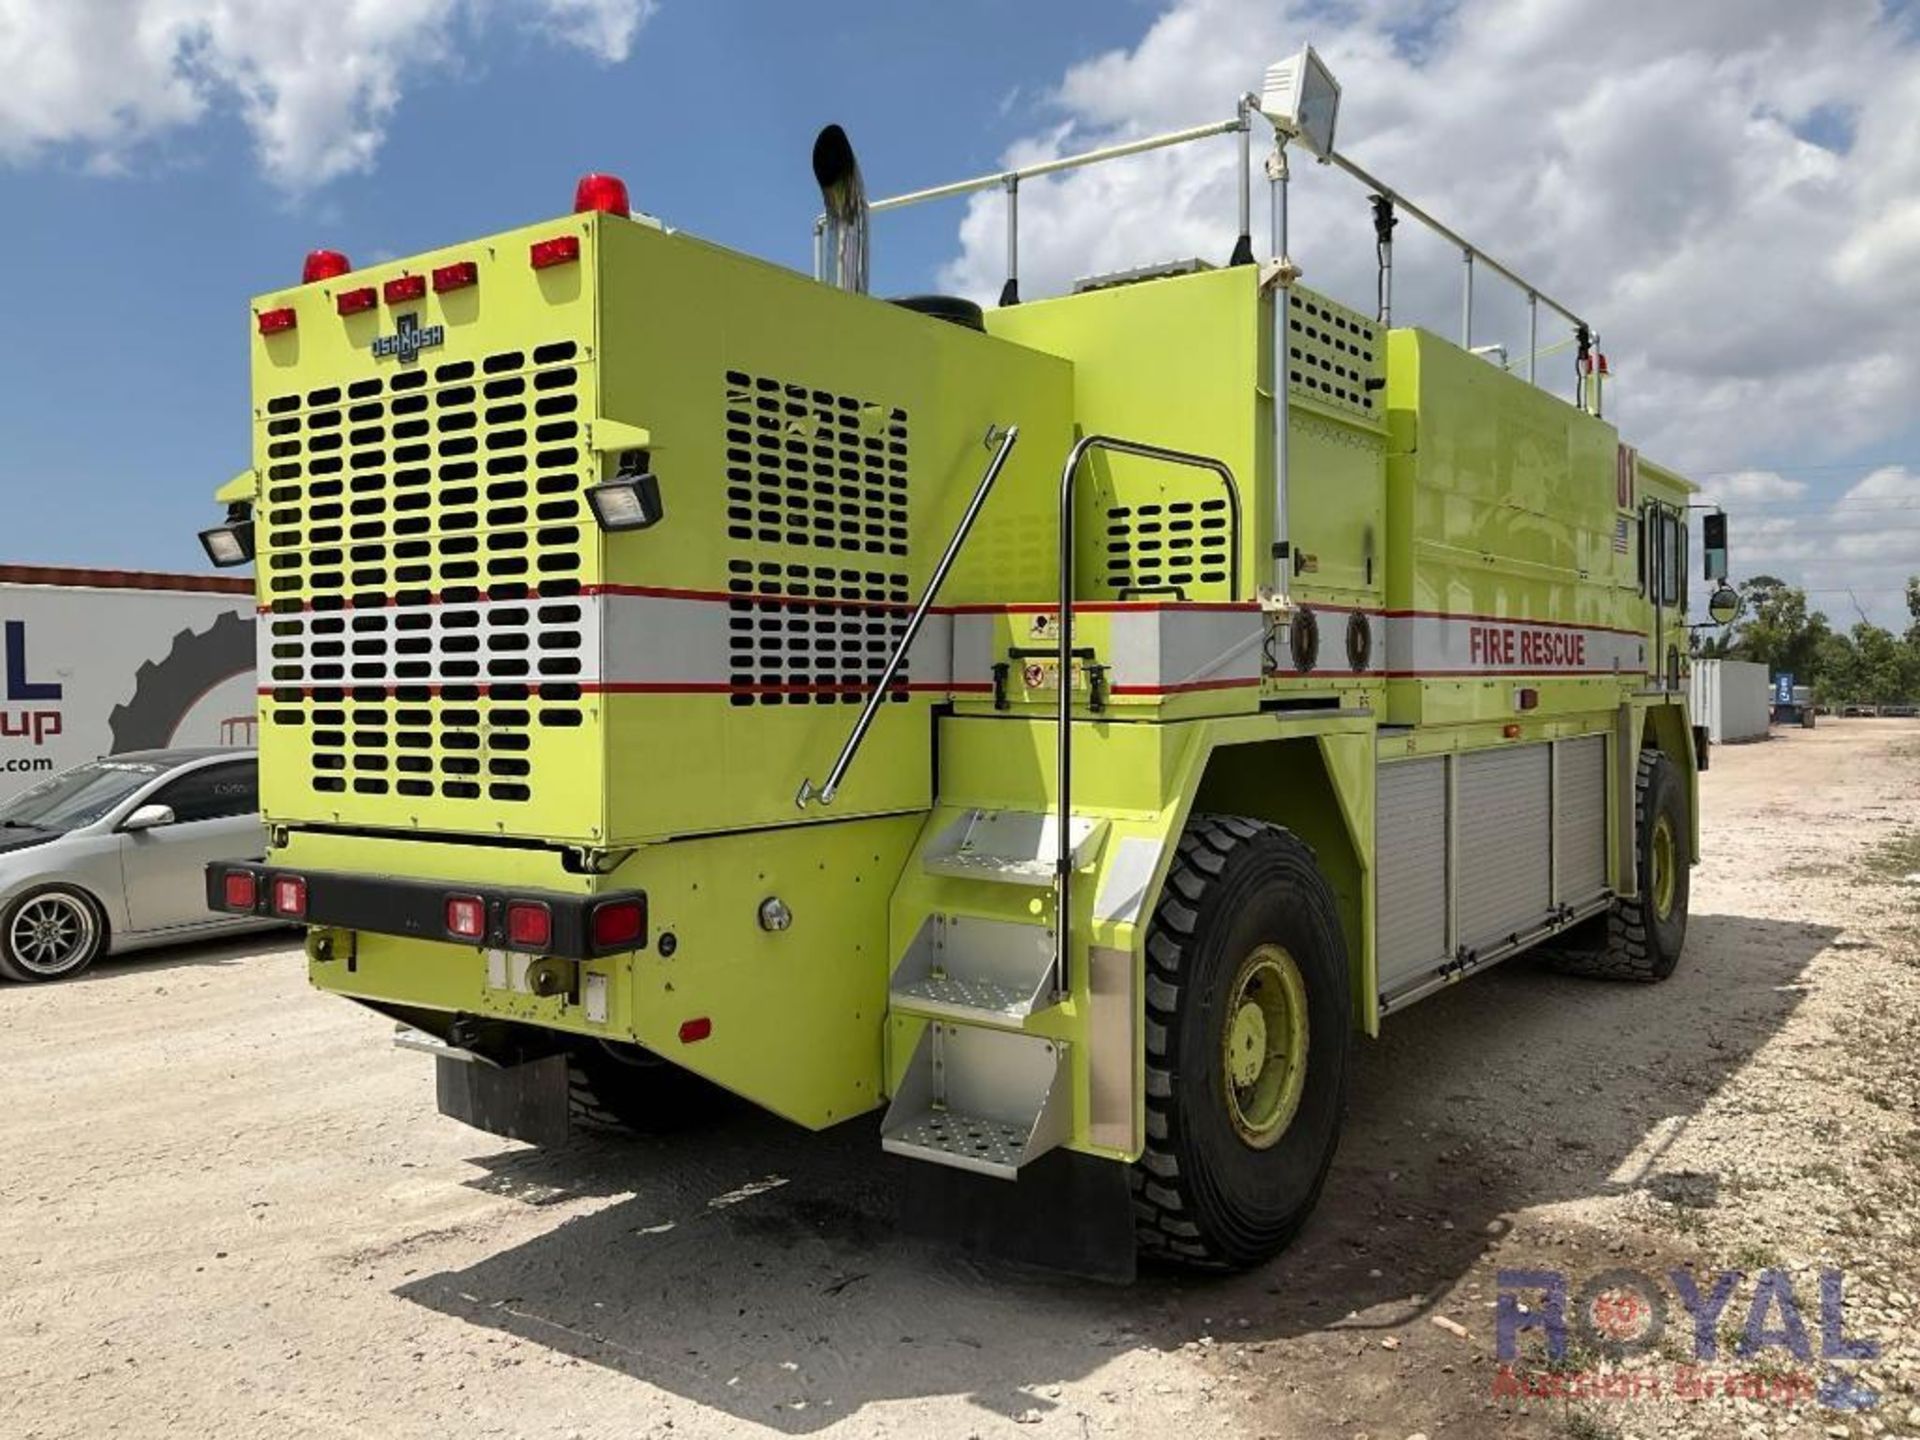 1998 Oshkosh T-series/P-19/Striker T-1500 4x4 Fire Rescue Water Truck - Image 3 of 61